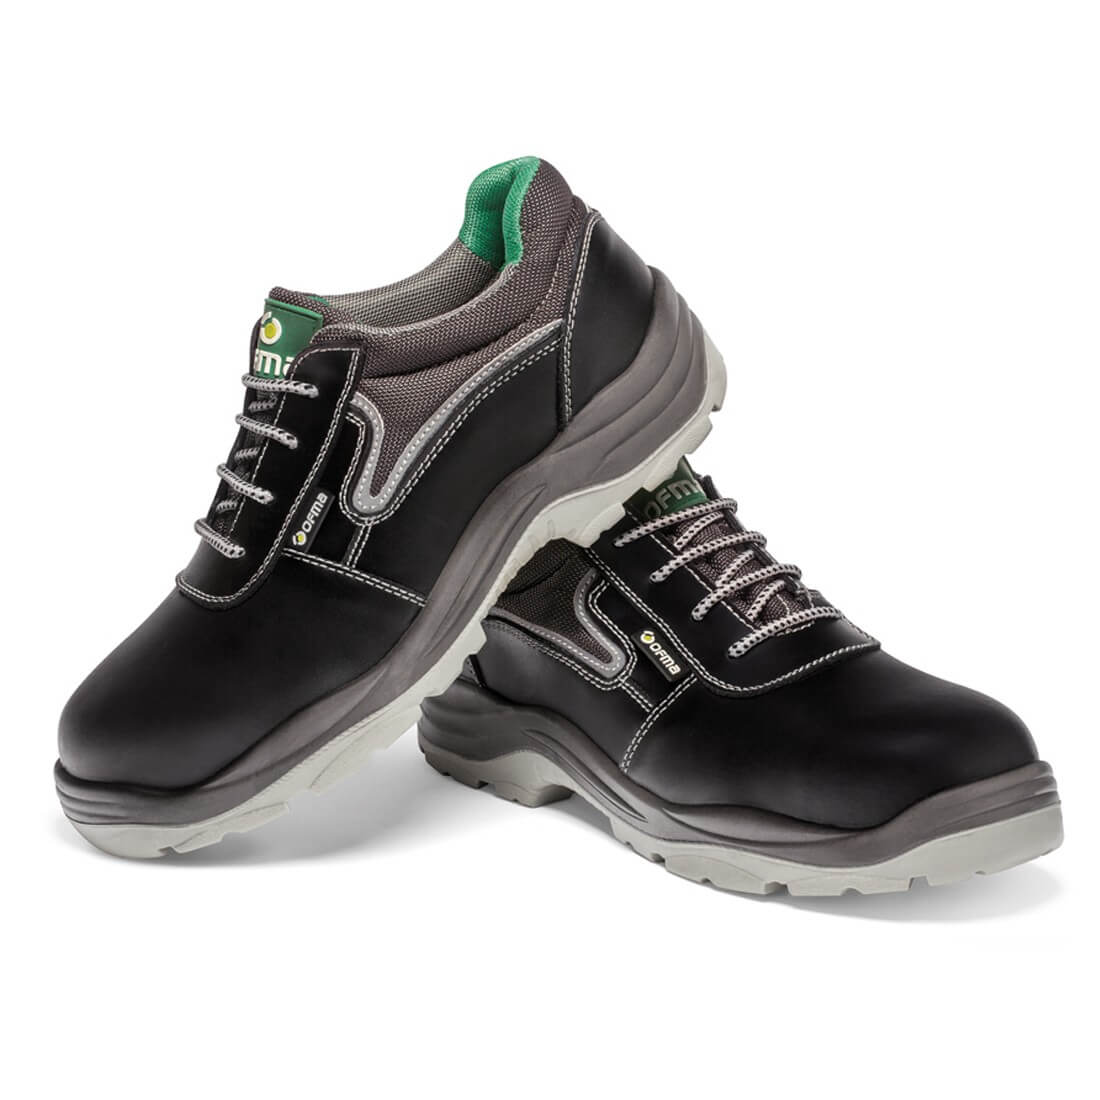 Pantof Odin S3 + CI + SRC - Incaltaminte de protectie | Bocanci, Pantofi, Sandale, Cizme